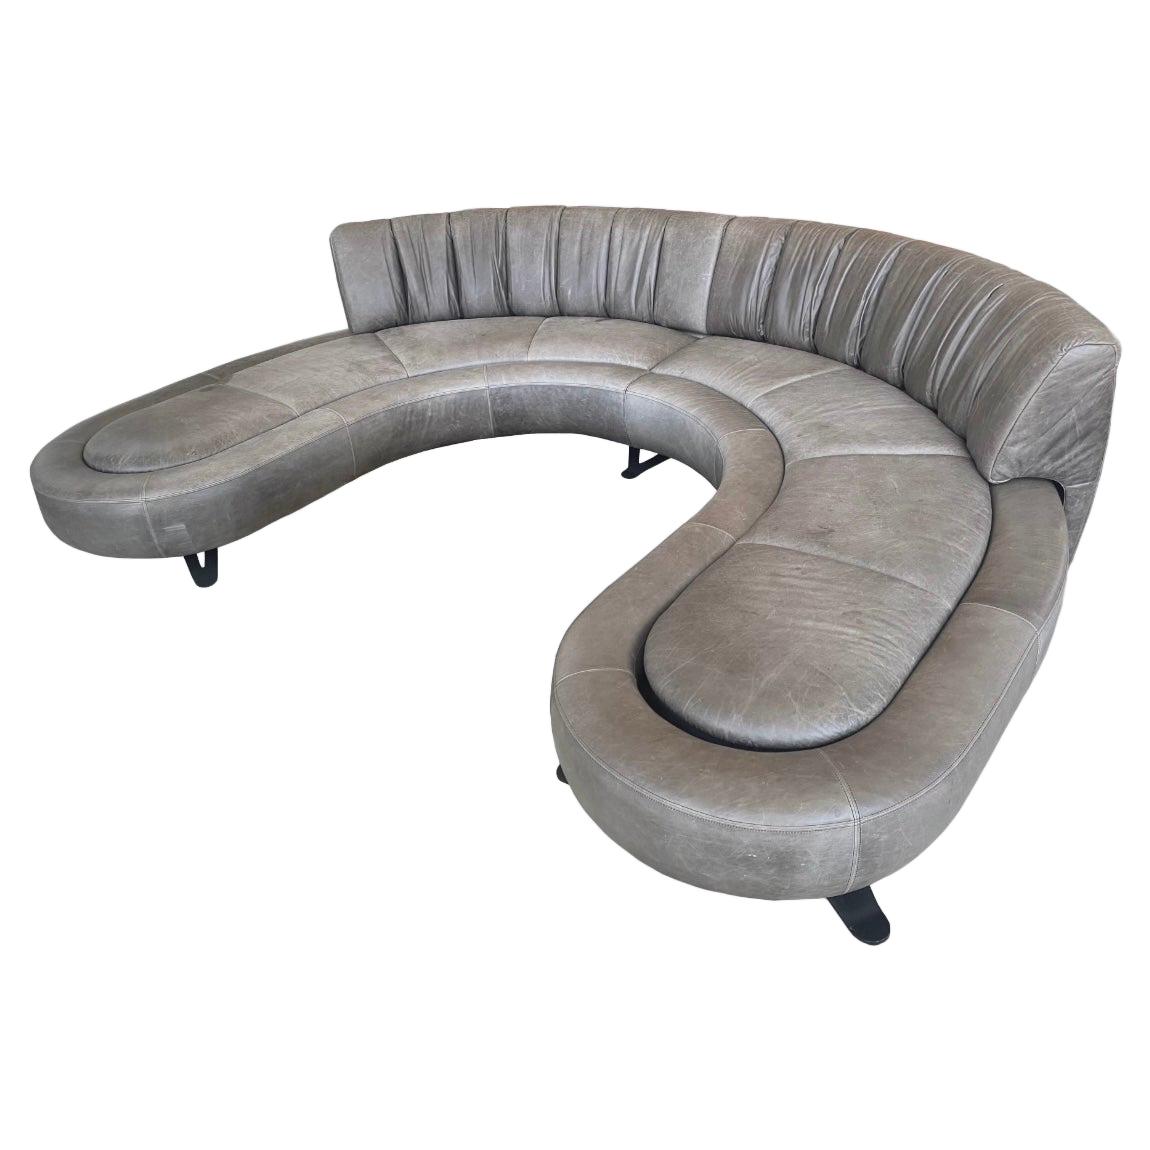 De Sede, Grey Leather Landscaped Sofa, Model DS-1064 by Hugo De Ruiter, 2008